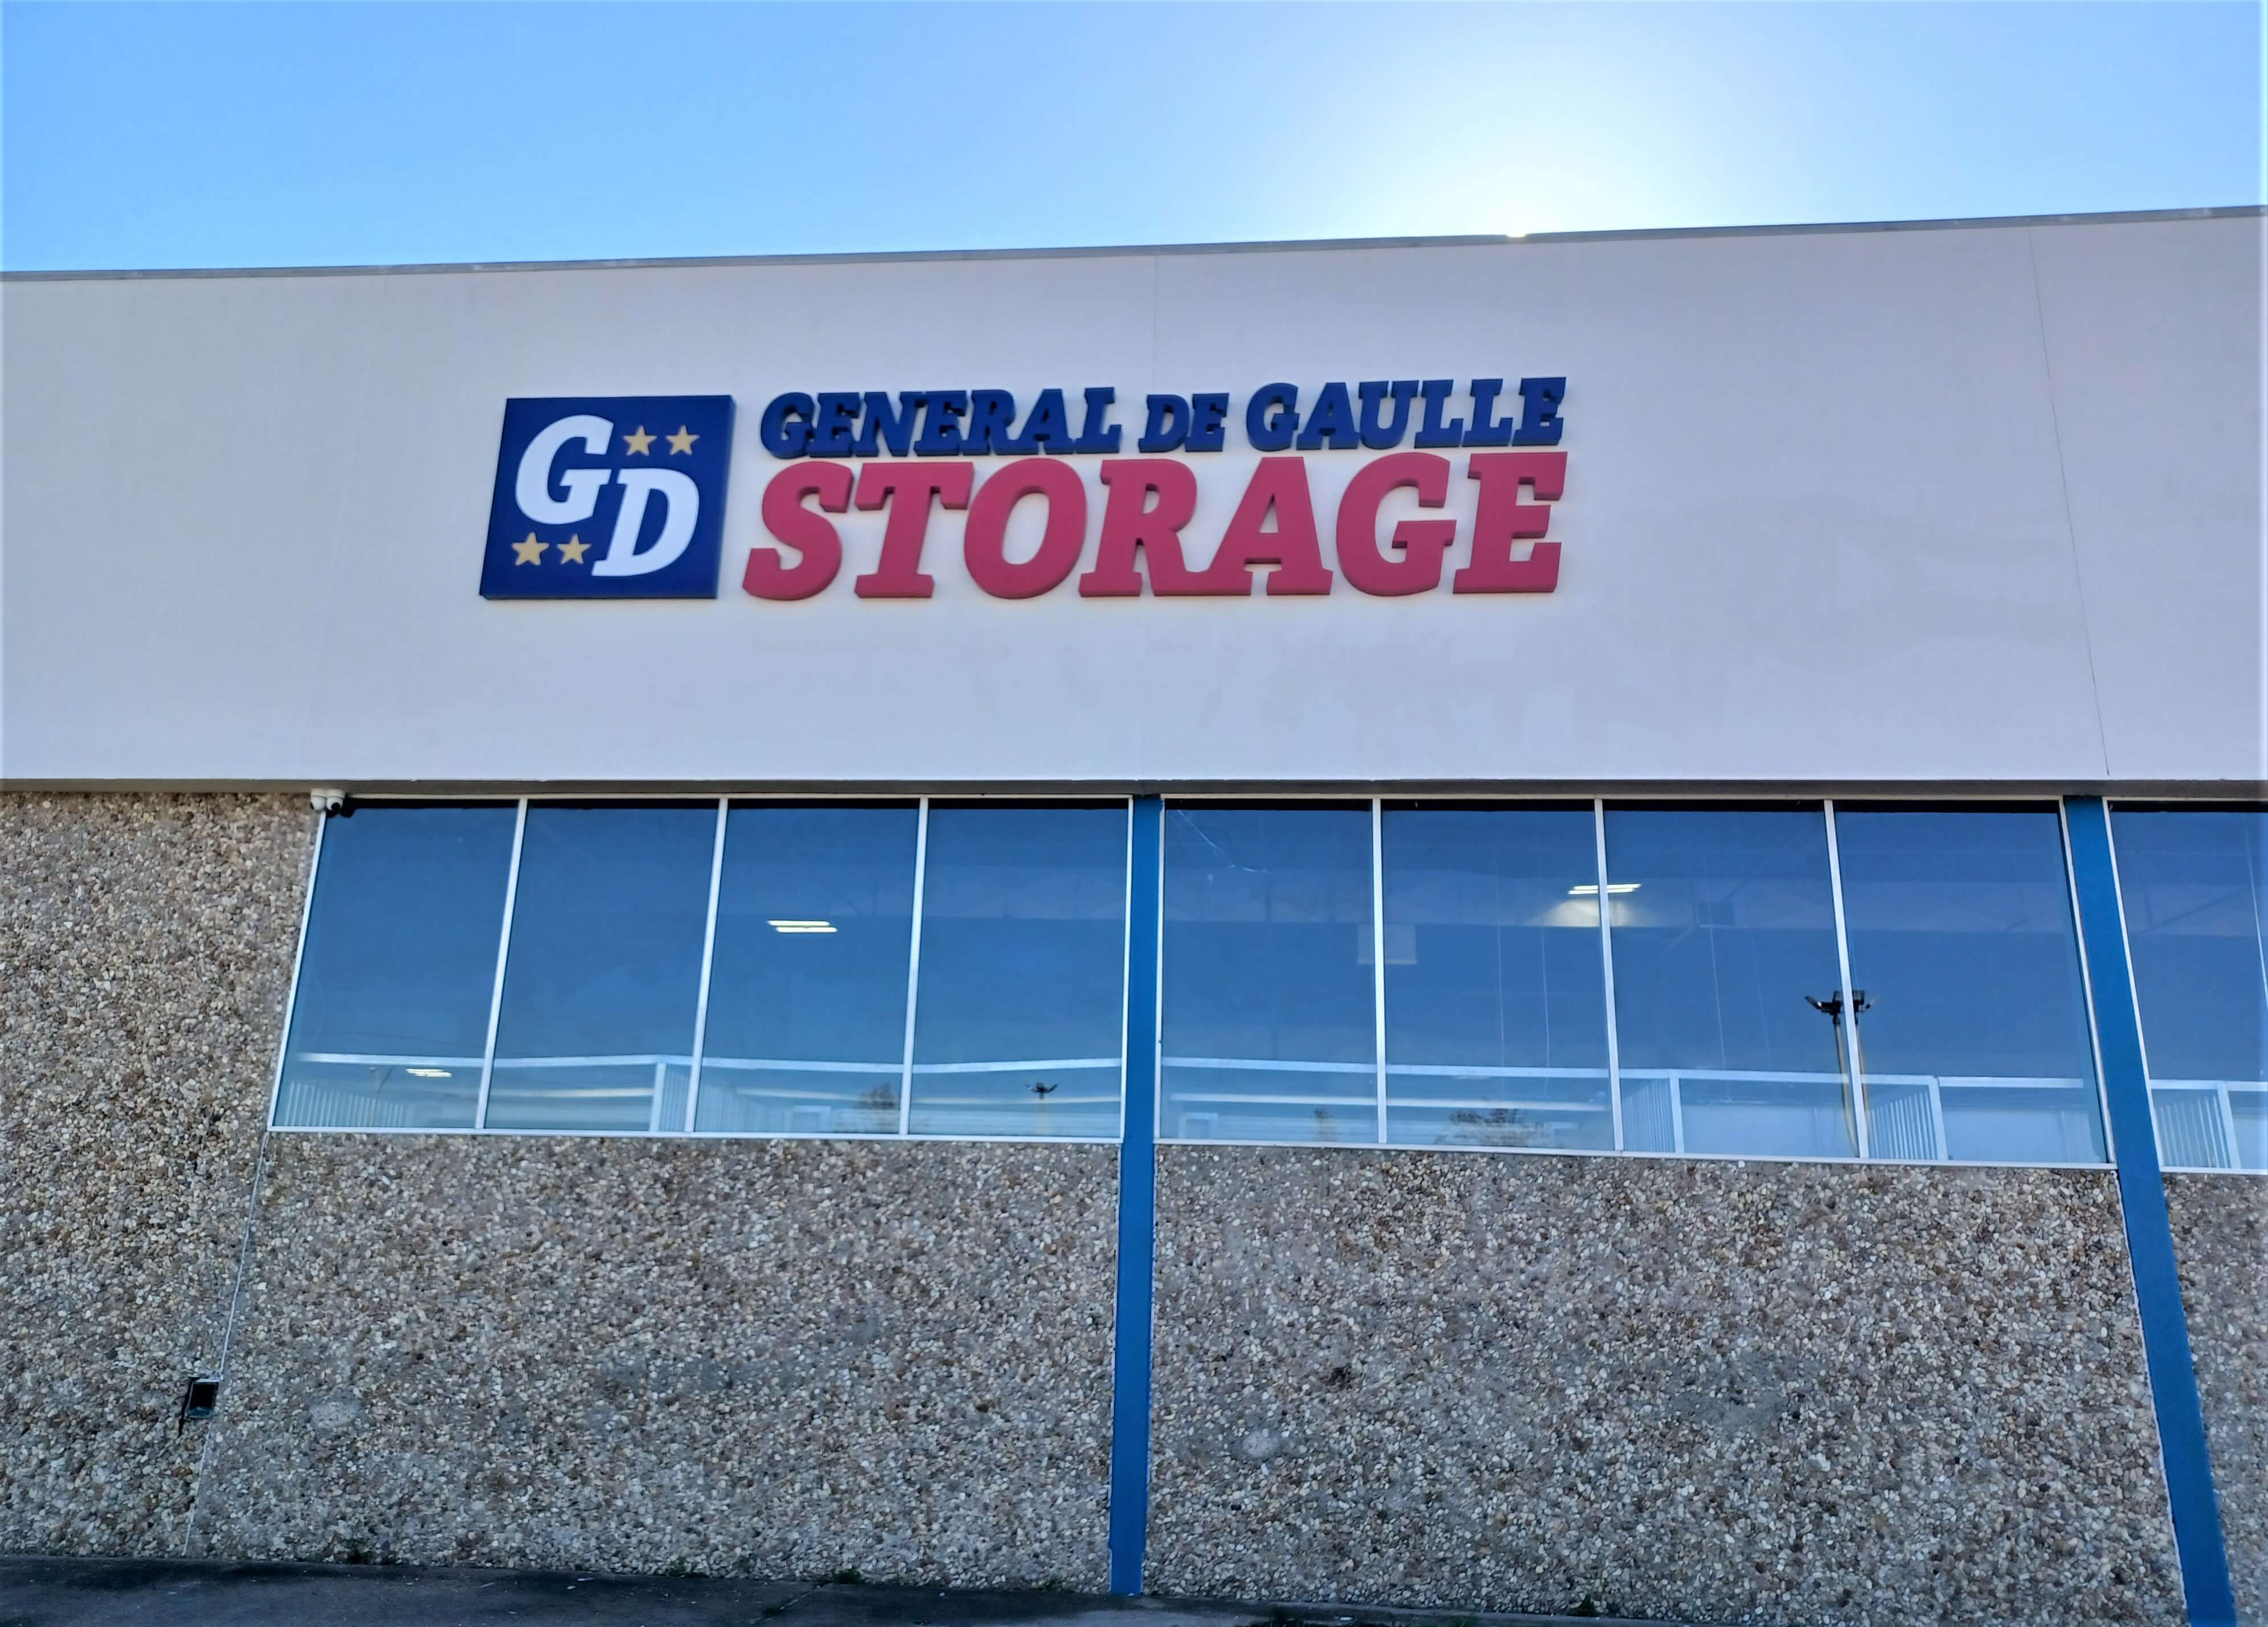 General de Gaulle Storage